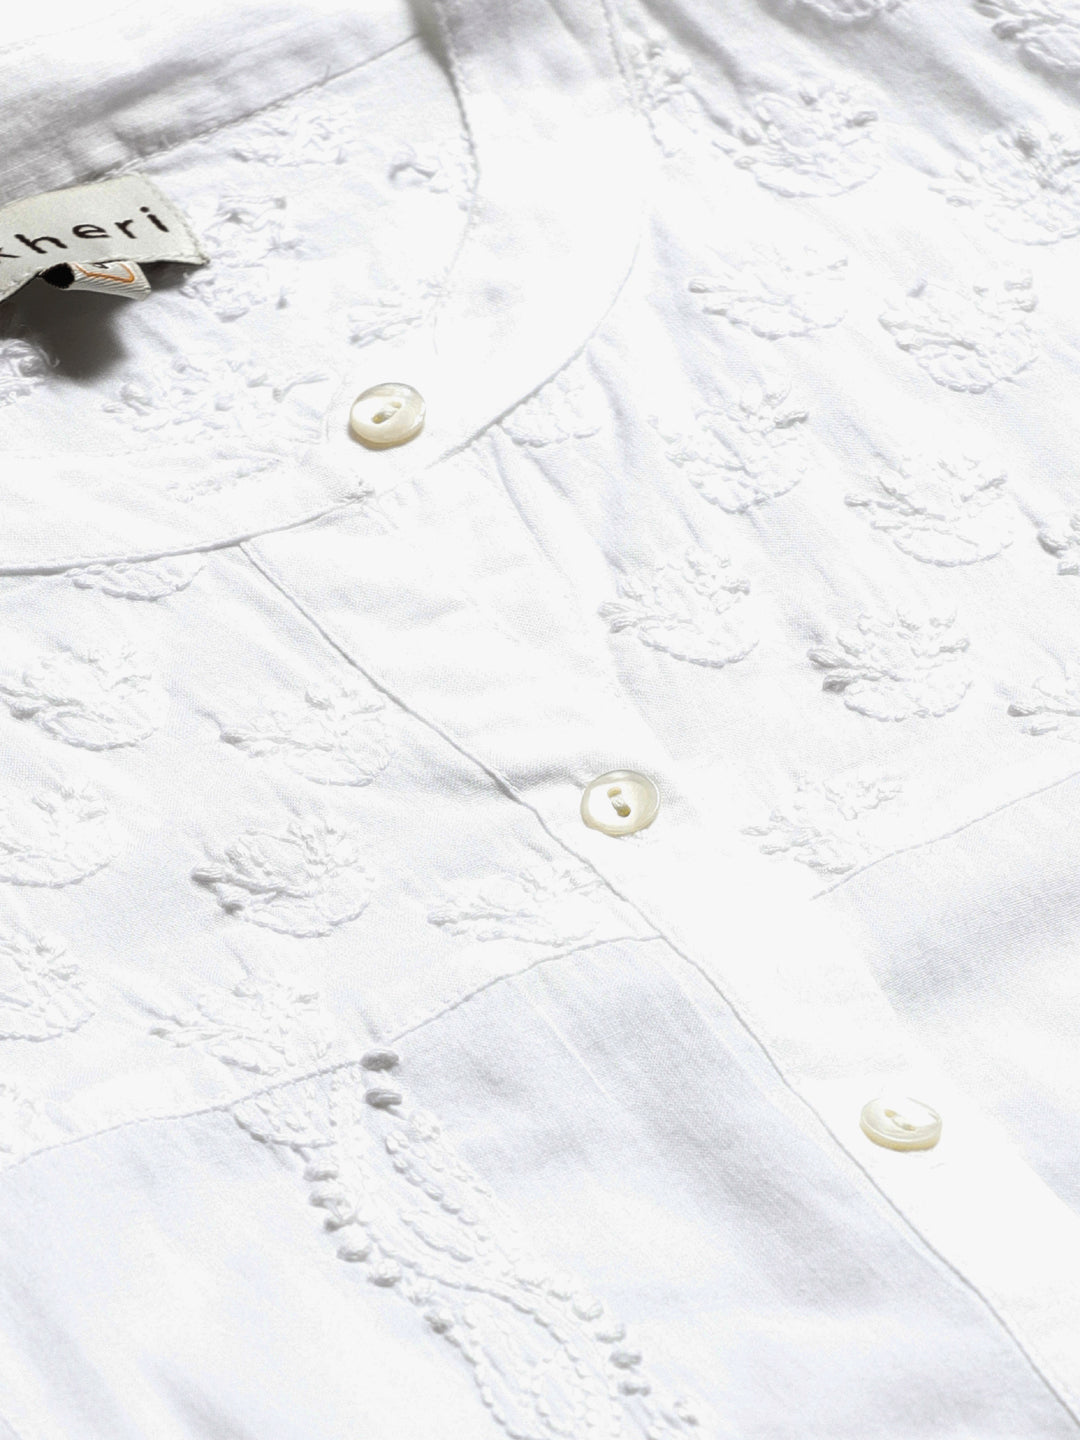 White Chikankari Embroidered Detail Casual Shirt